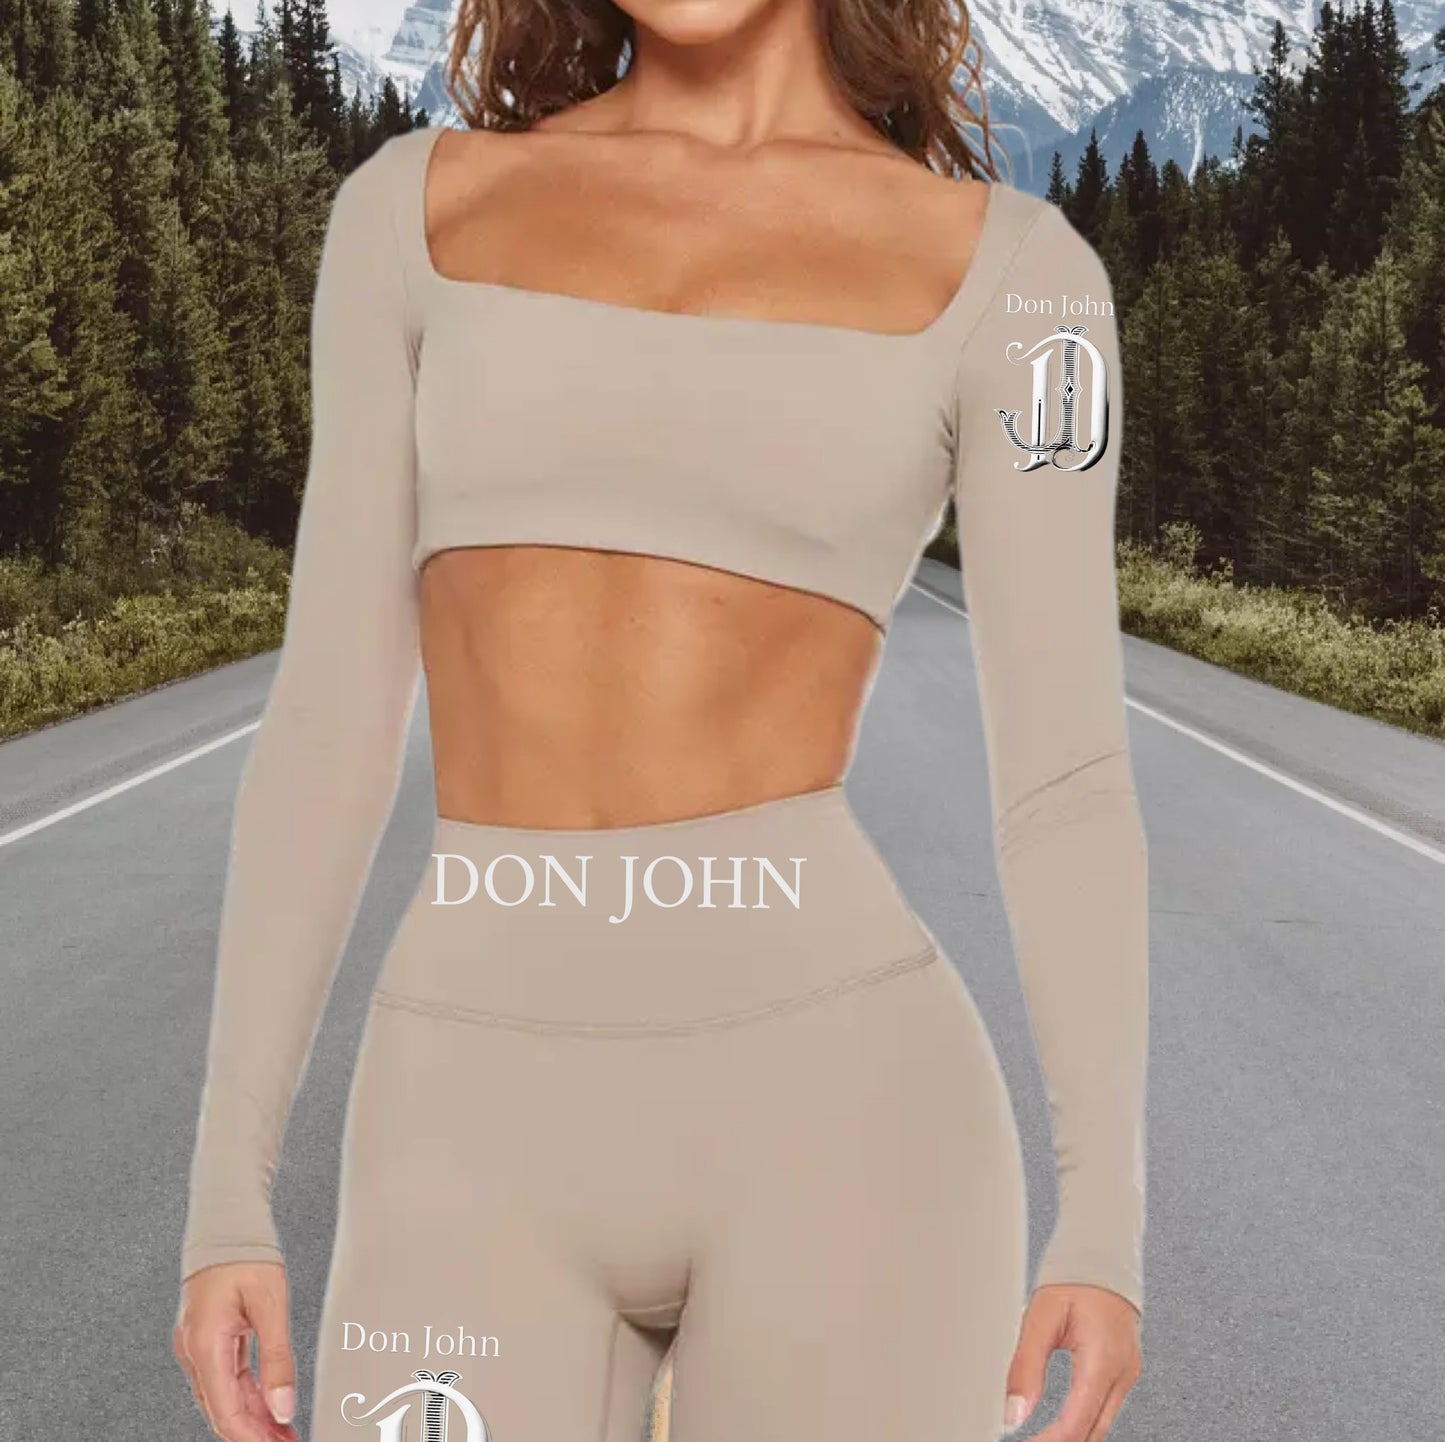 DON JOHN Yoga Top & Bottom Women's